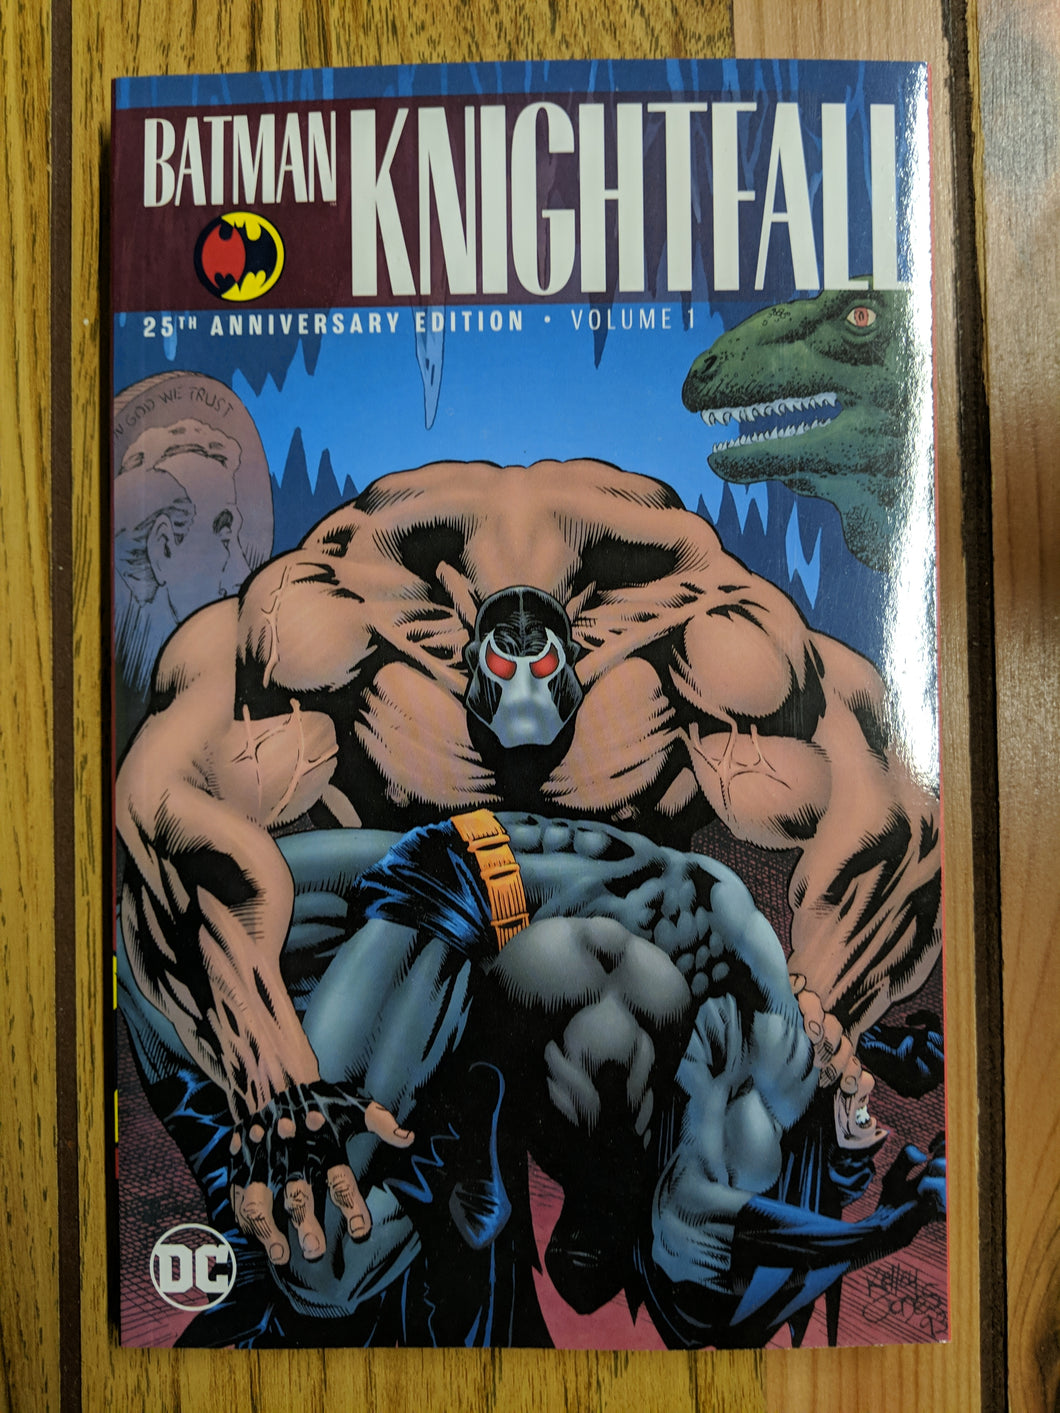 Batman: Knightfall Vol 1 – Lucky's Books and Comics